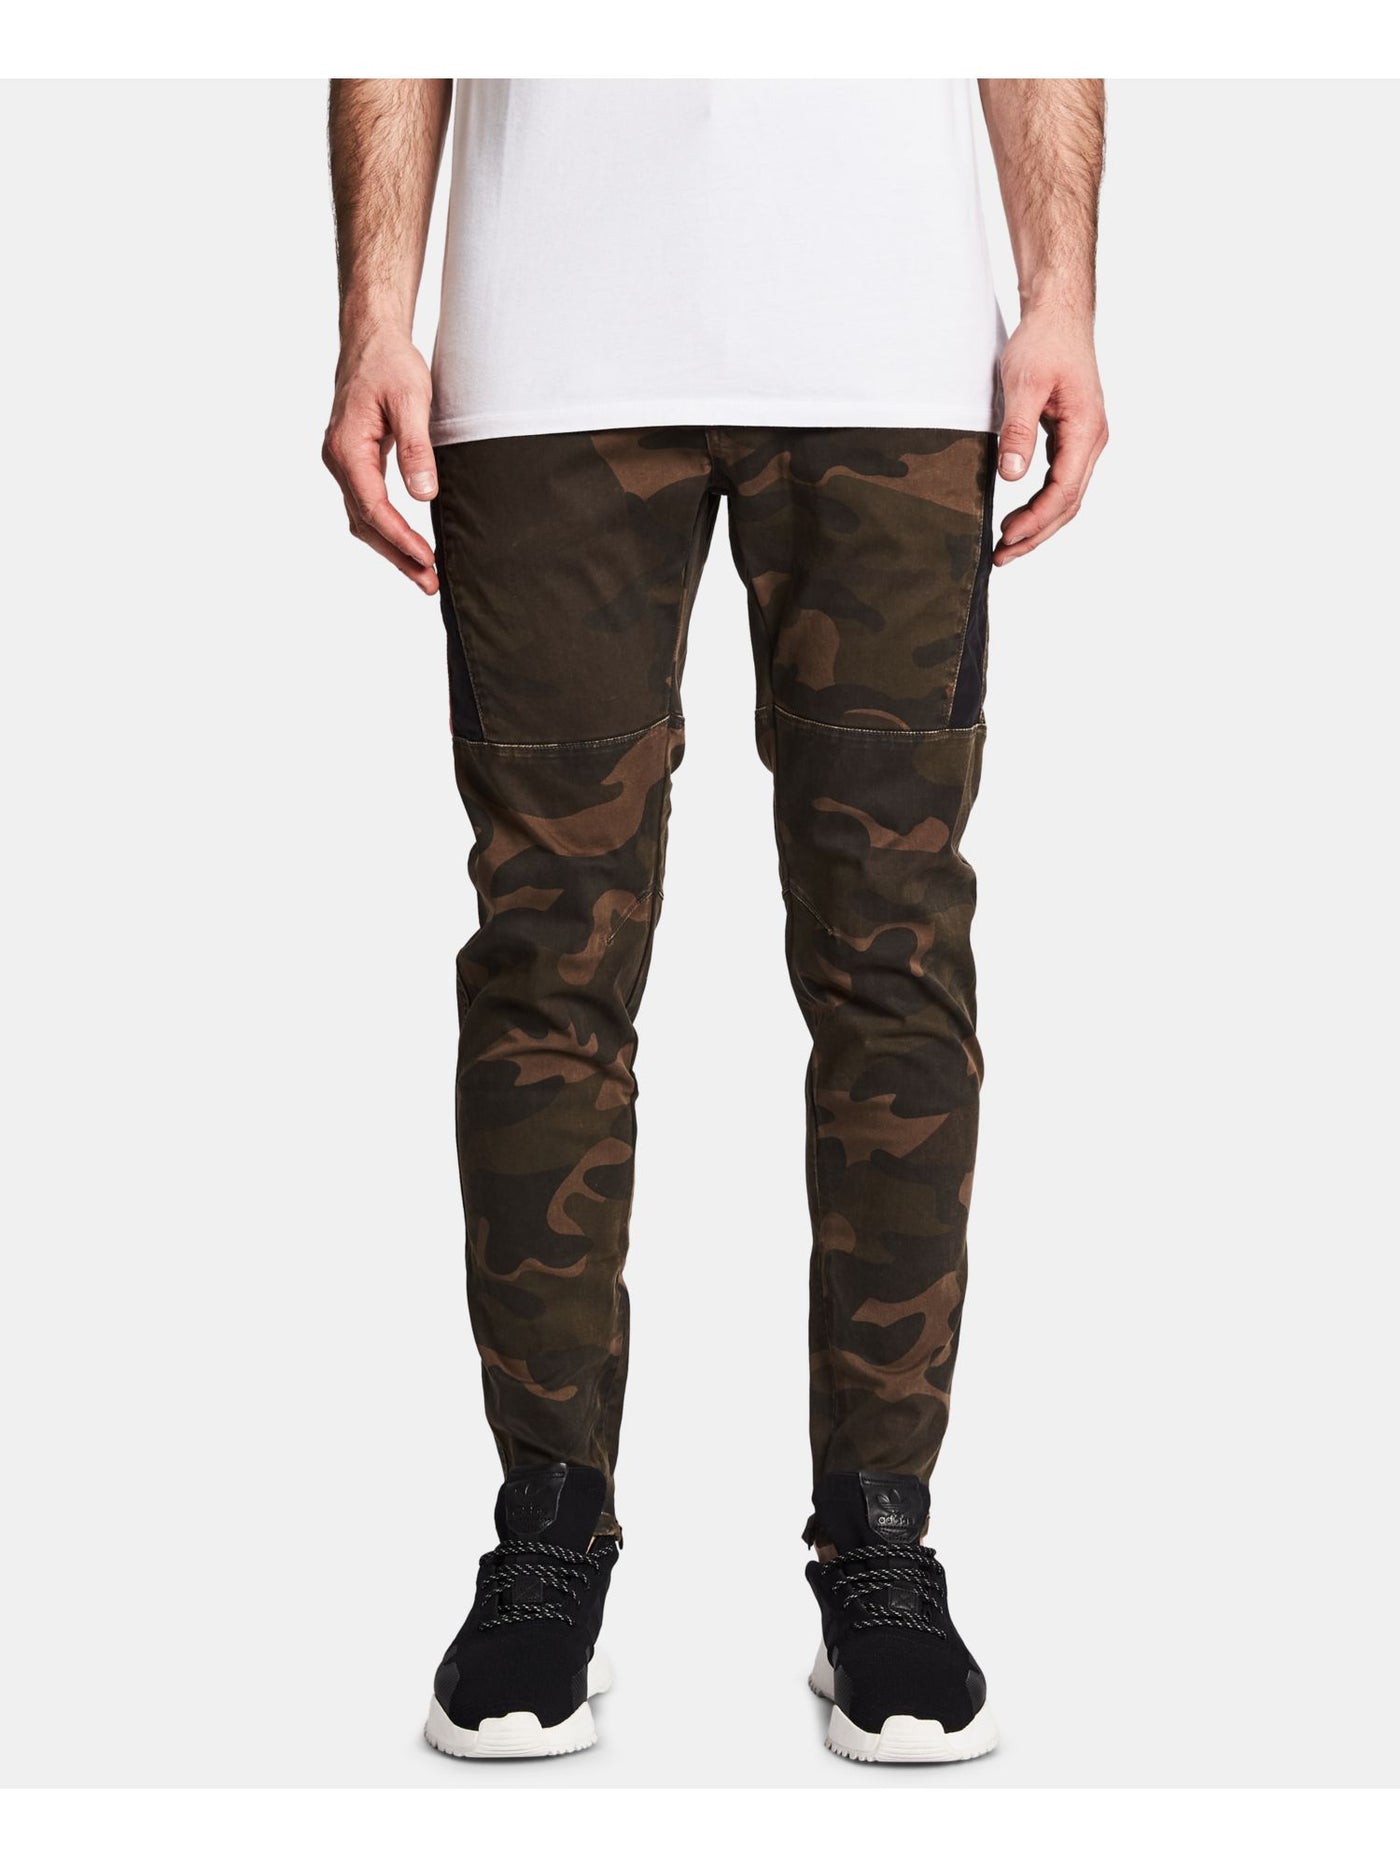 NXP Mens Brown Camouflage Cotton Blend Jeans 30 Waist